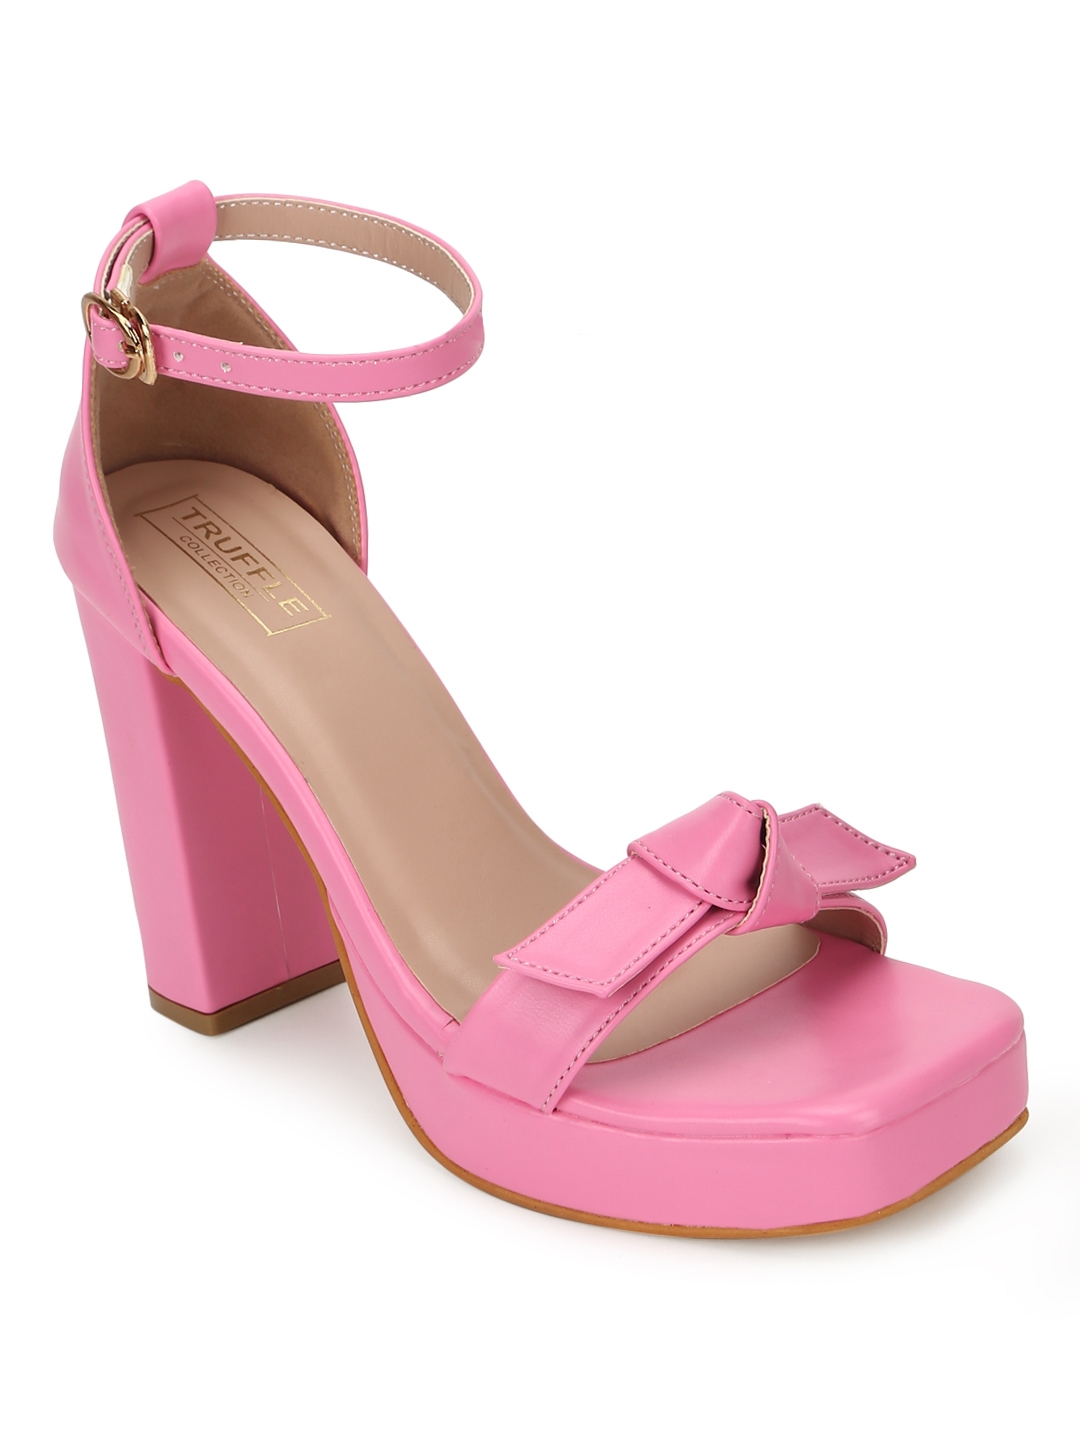 Truffle Collection | Fuschia Pink PU Bow Detail High Block Heels